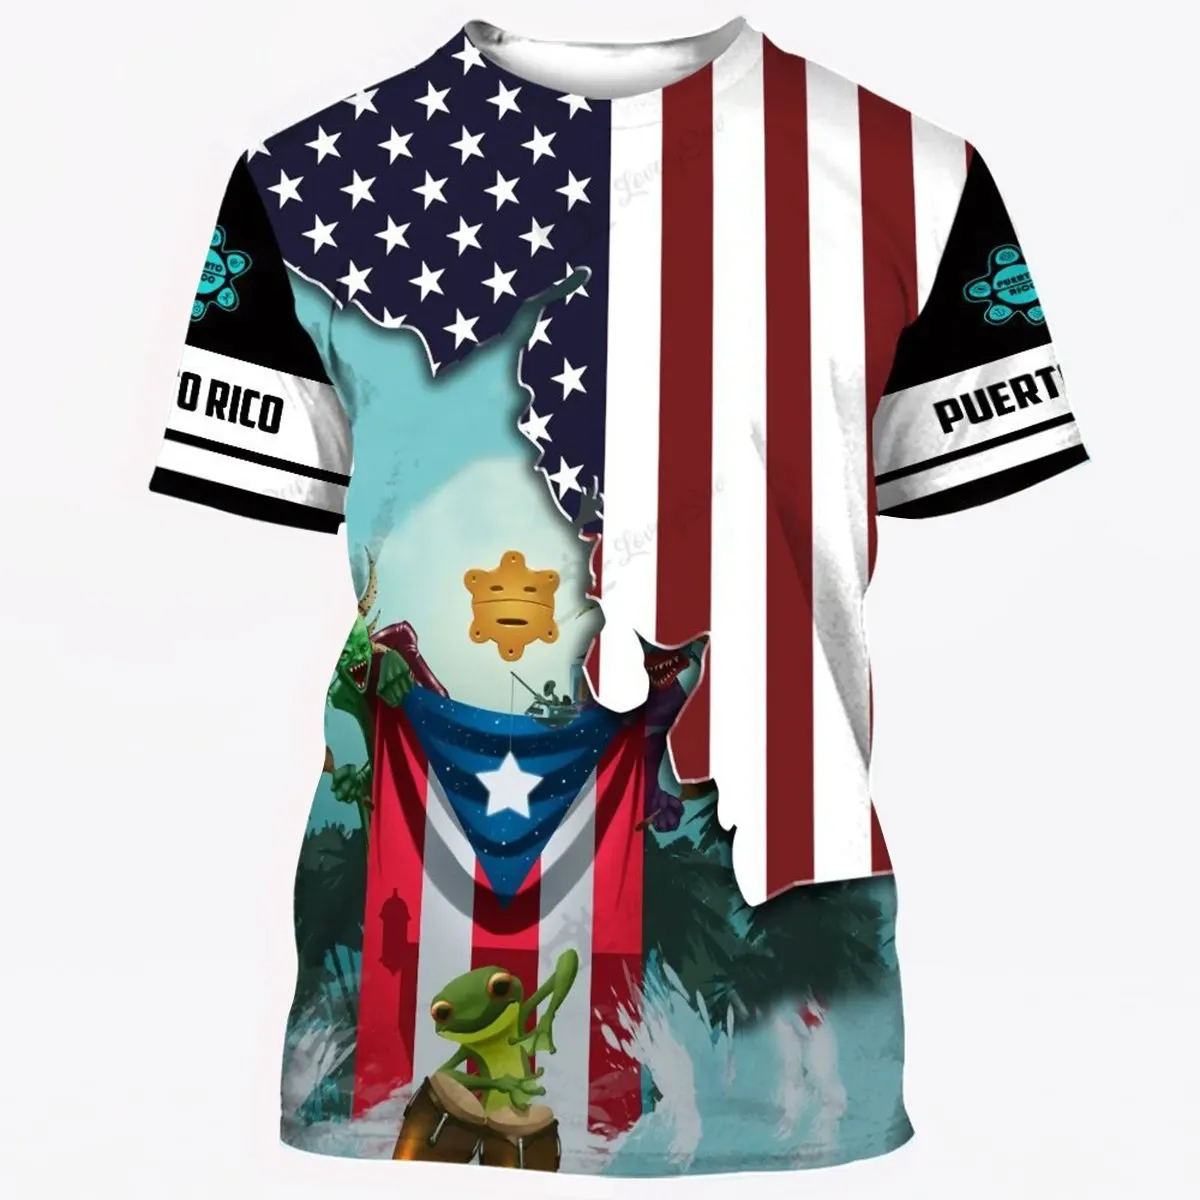 T-shirt – Encanto Rican Puerto Rico Two Flag Tee